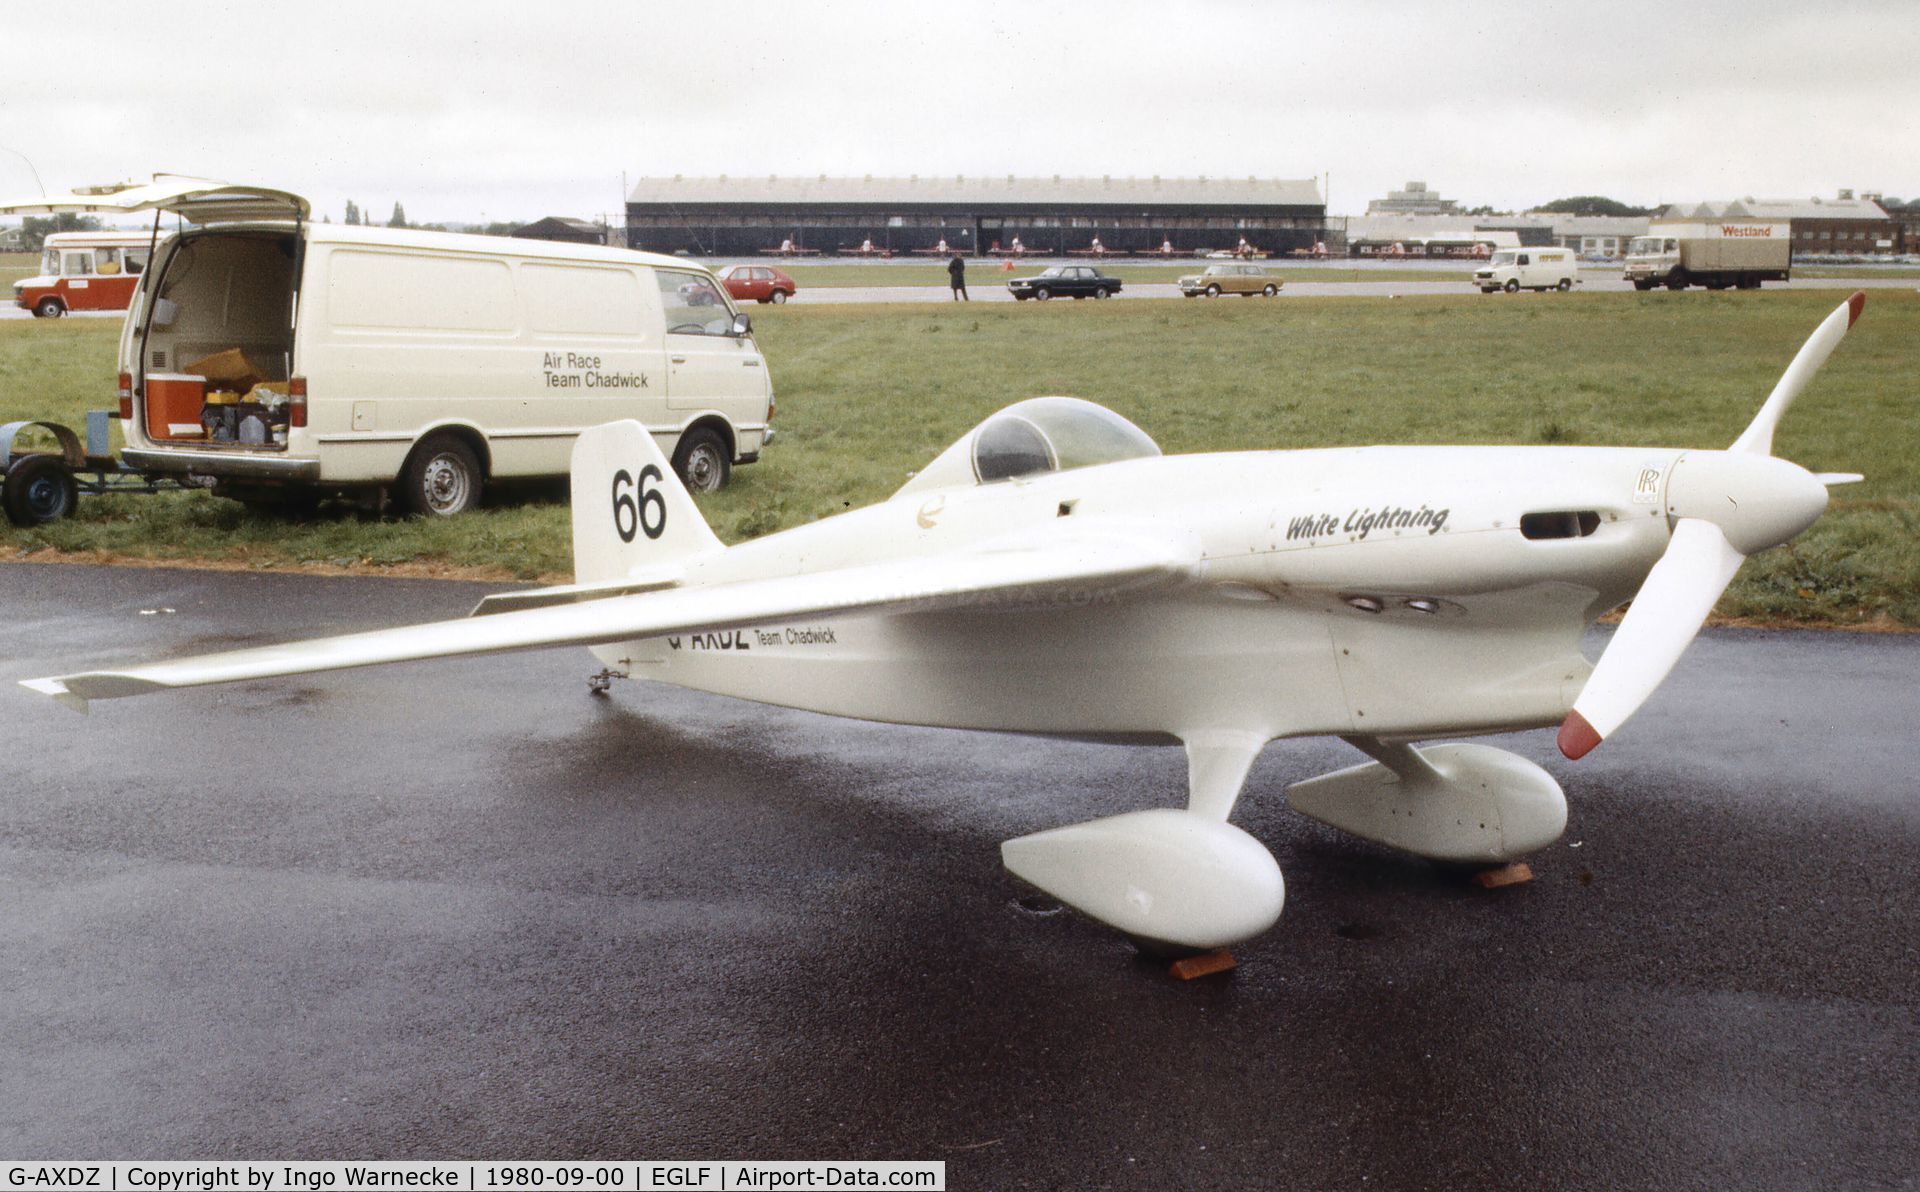 G-AXDZ, 1969 Cassutt IIIM Racer C/N PFA 1341, Airmark Cassutt Speed One of Air Race Team Chadwick at Farnborough International 1980